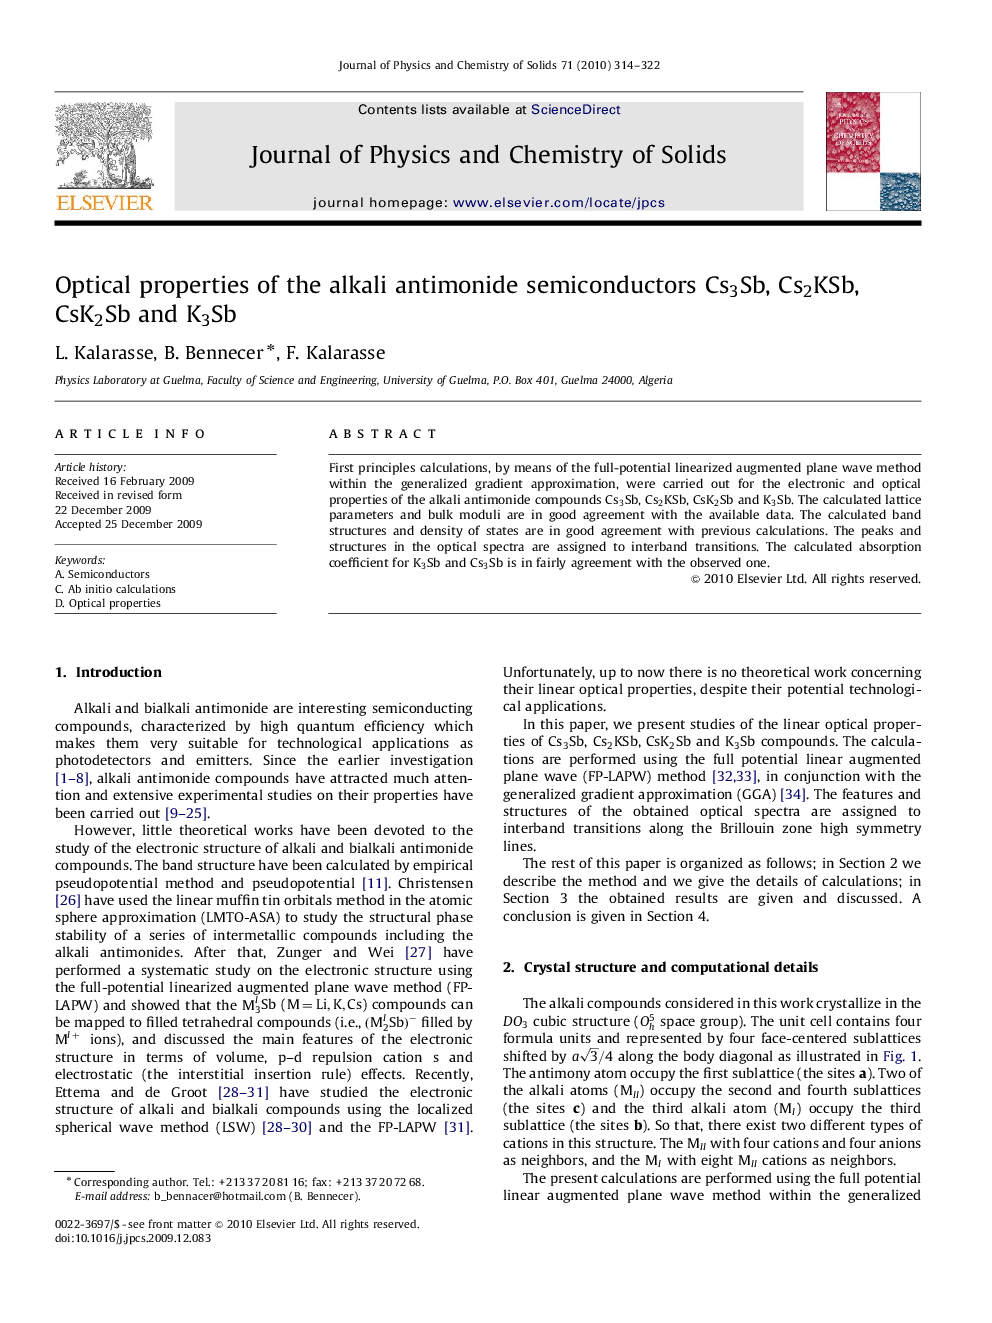 Optical properties of the alkali antimonide semiconductors Cs3SbCs3Sb, Cs2KSbCs2KSb, CsK2SbCsK2Sb and K3SbK3Sb